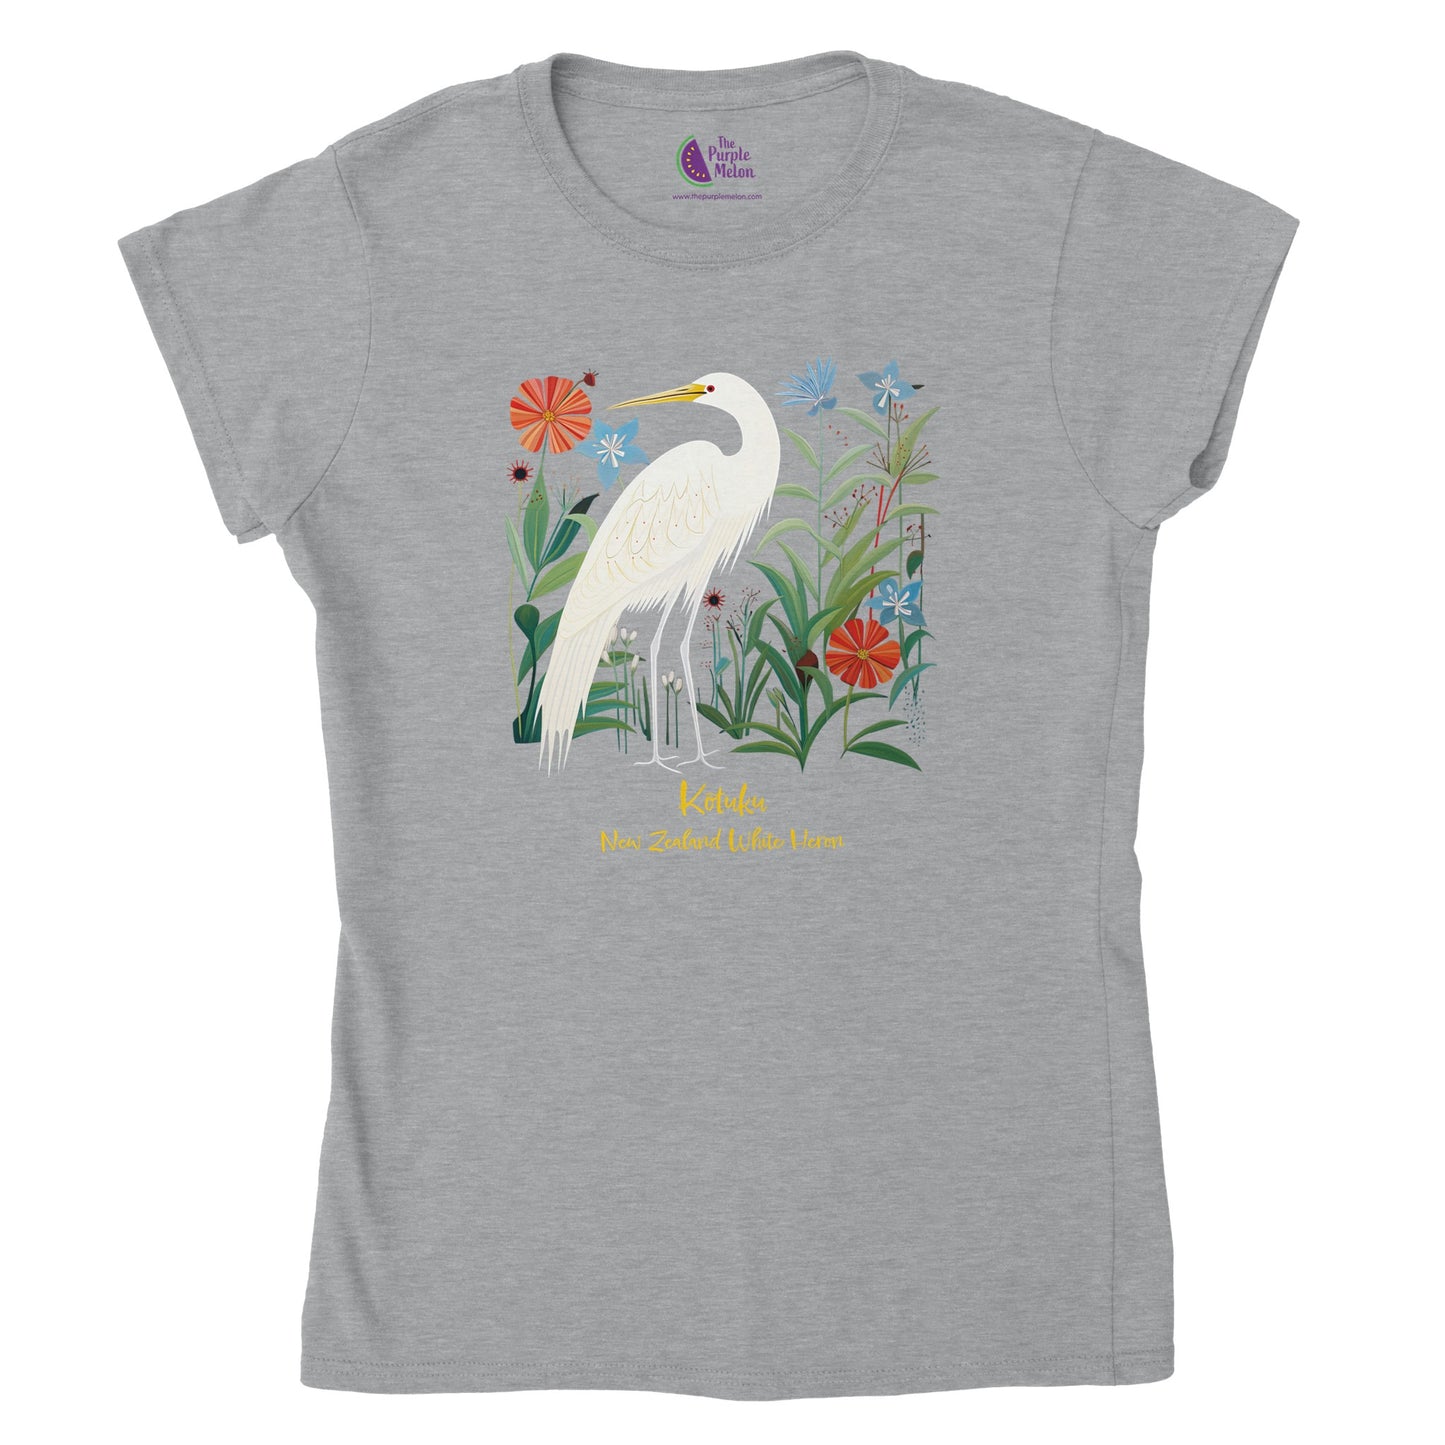 Sports Grey t-shirt with a New Zealand Kōtuku white heron print